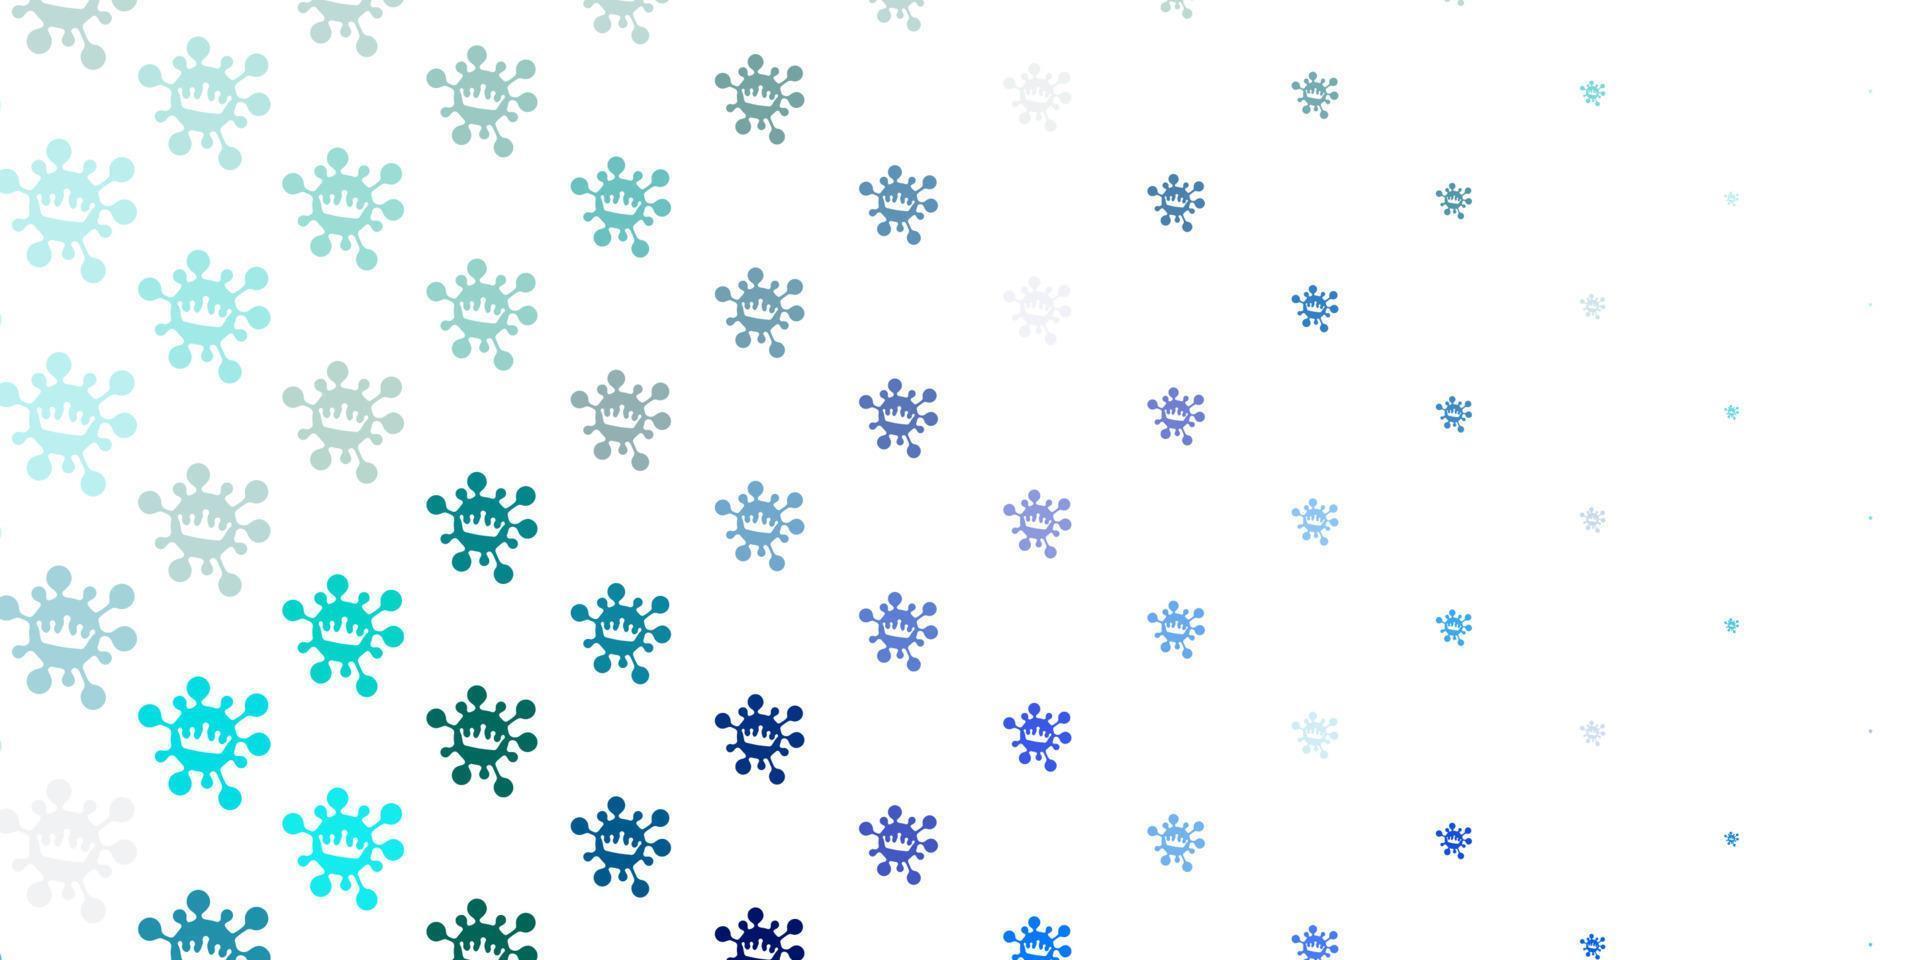 textura de vector azul claro con símbolos de enfermedades.